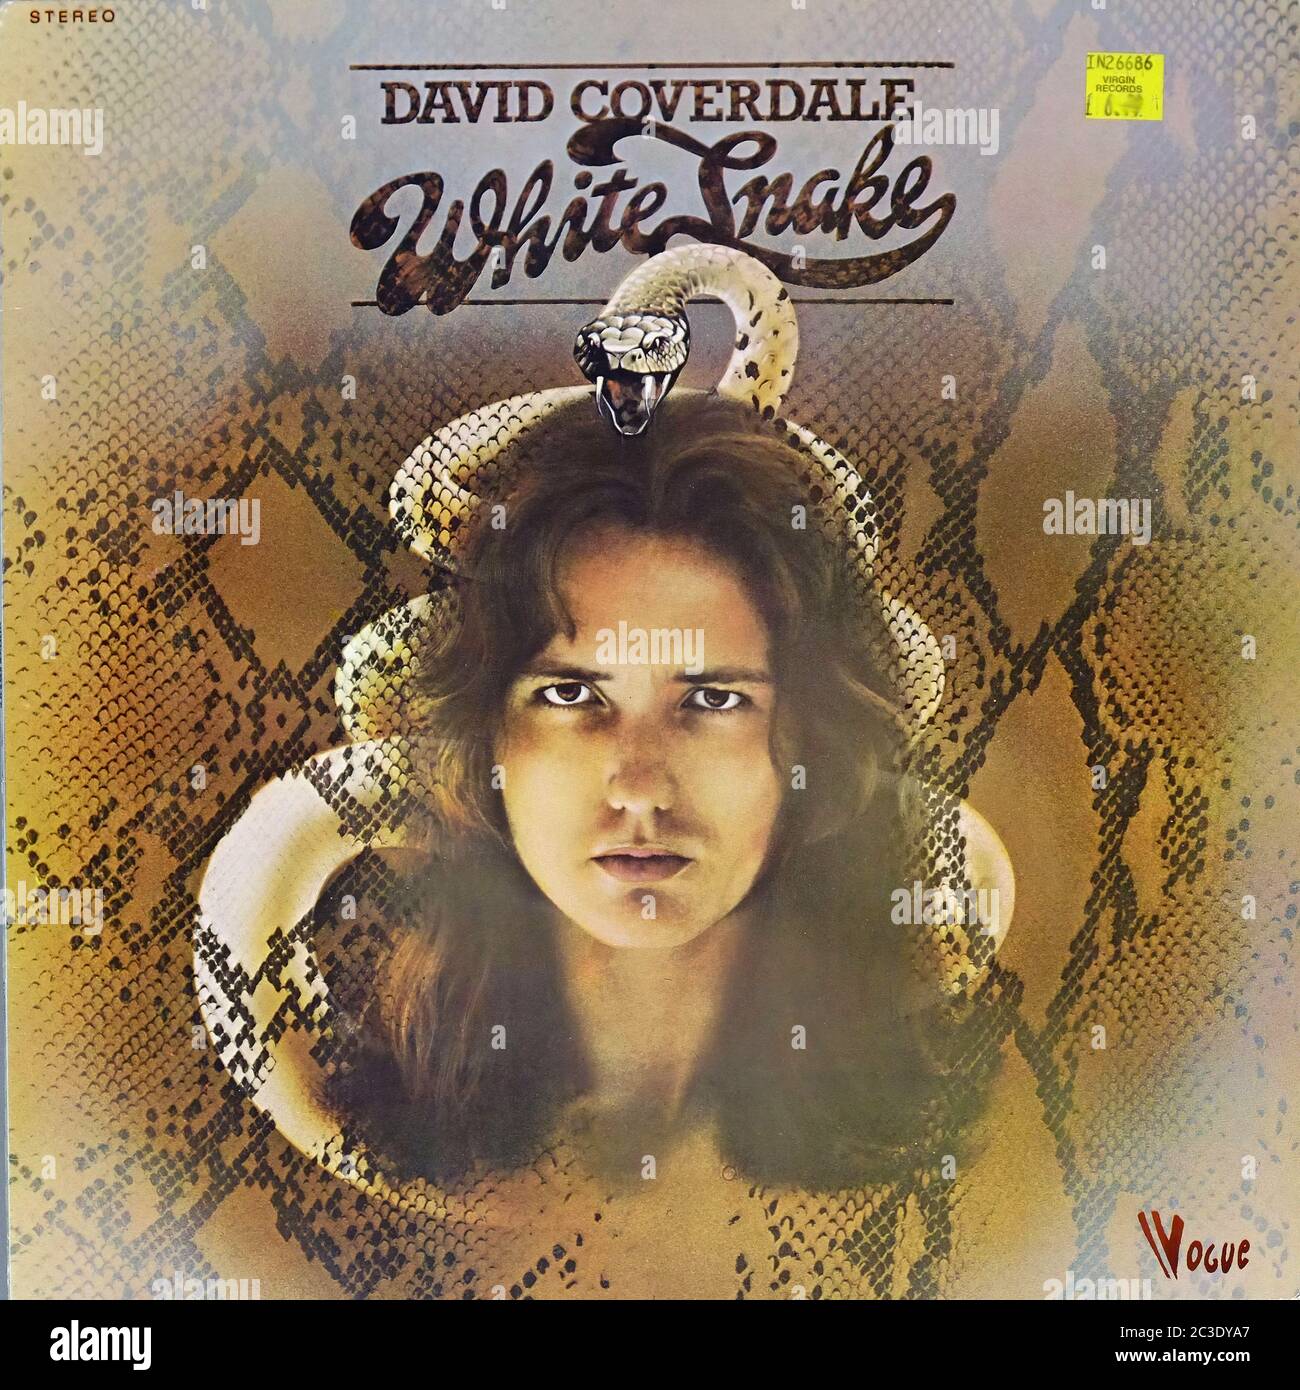 DAVID COVERDALE WHITE SNAKE  - Vintage 12'' LP vinyl Cover Stock Photo